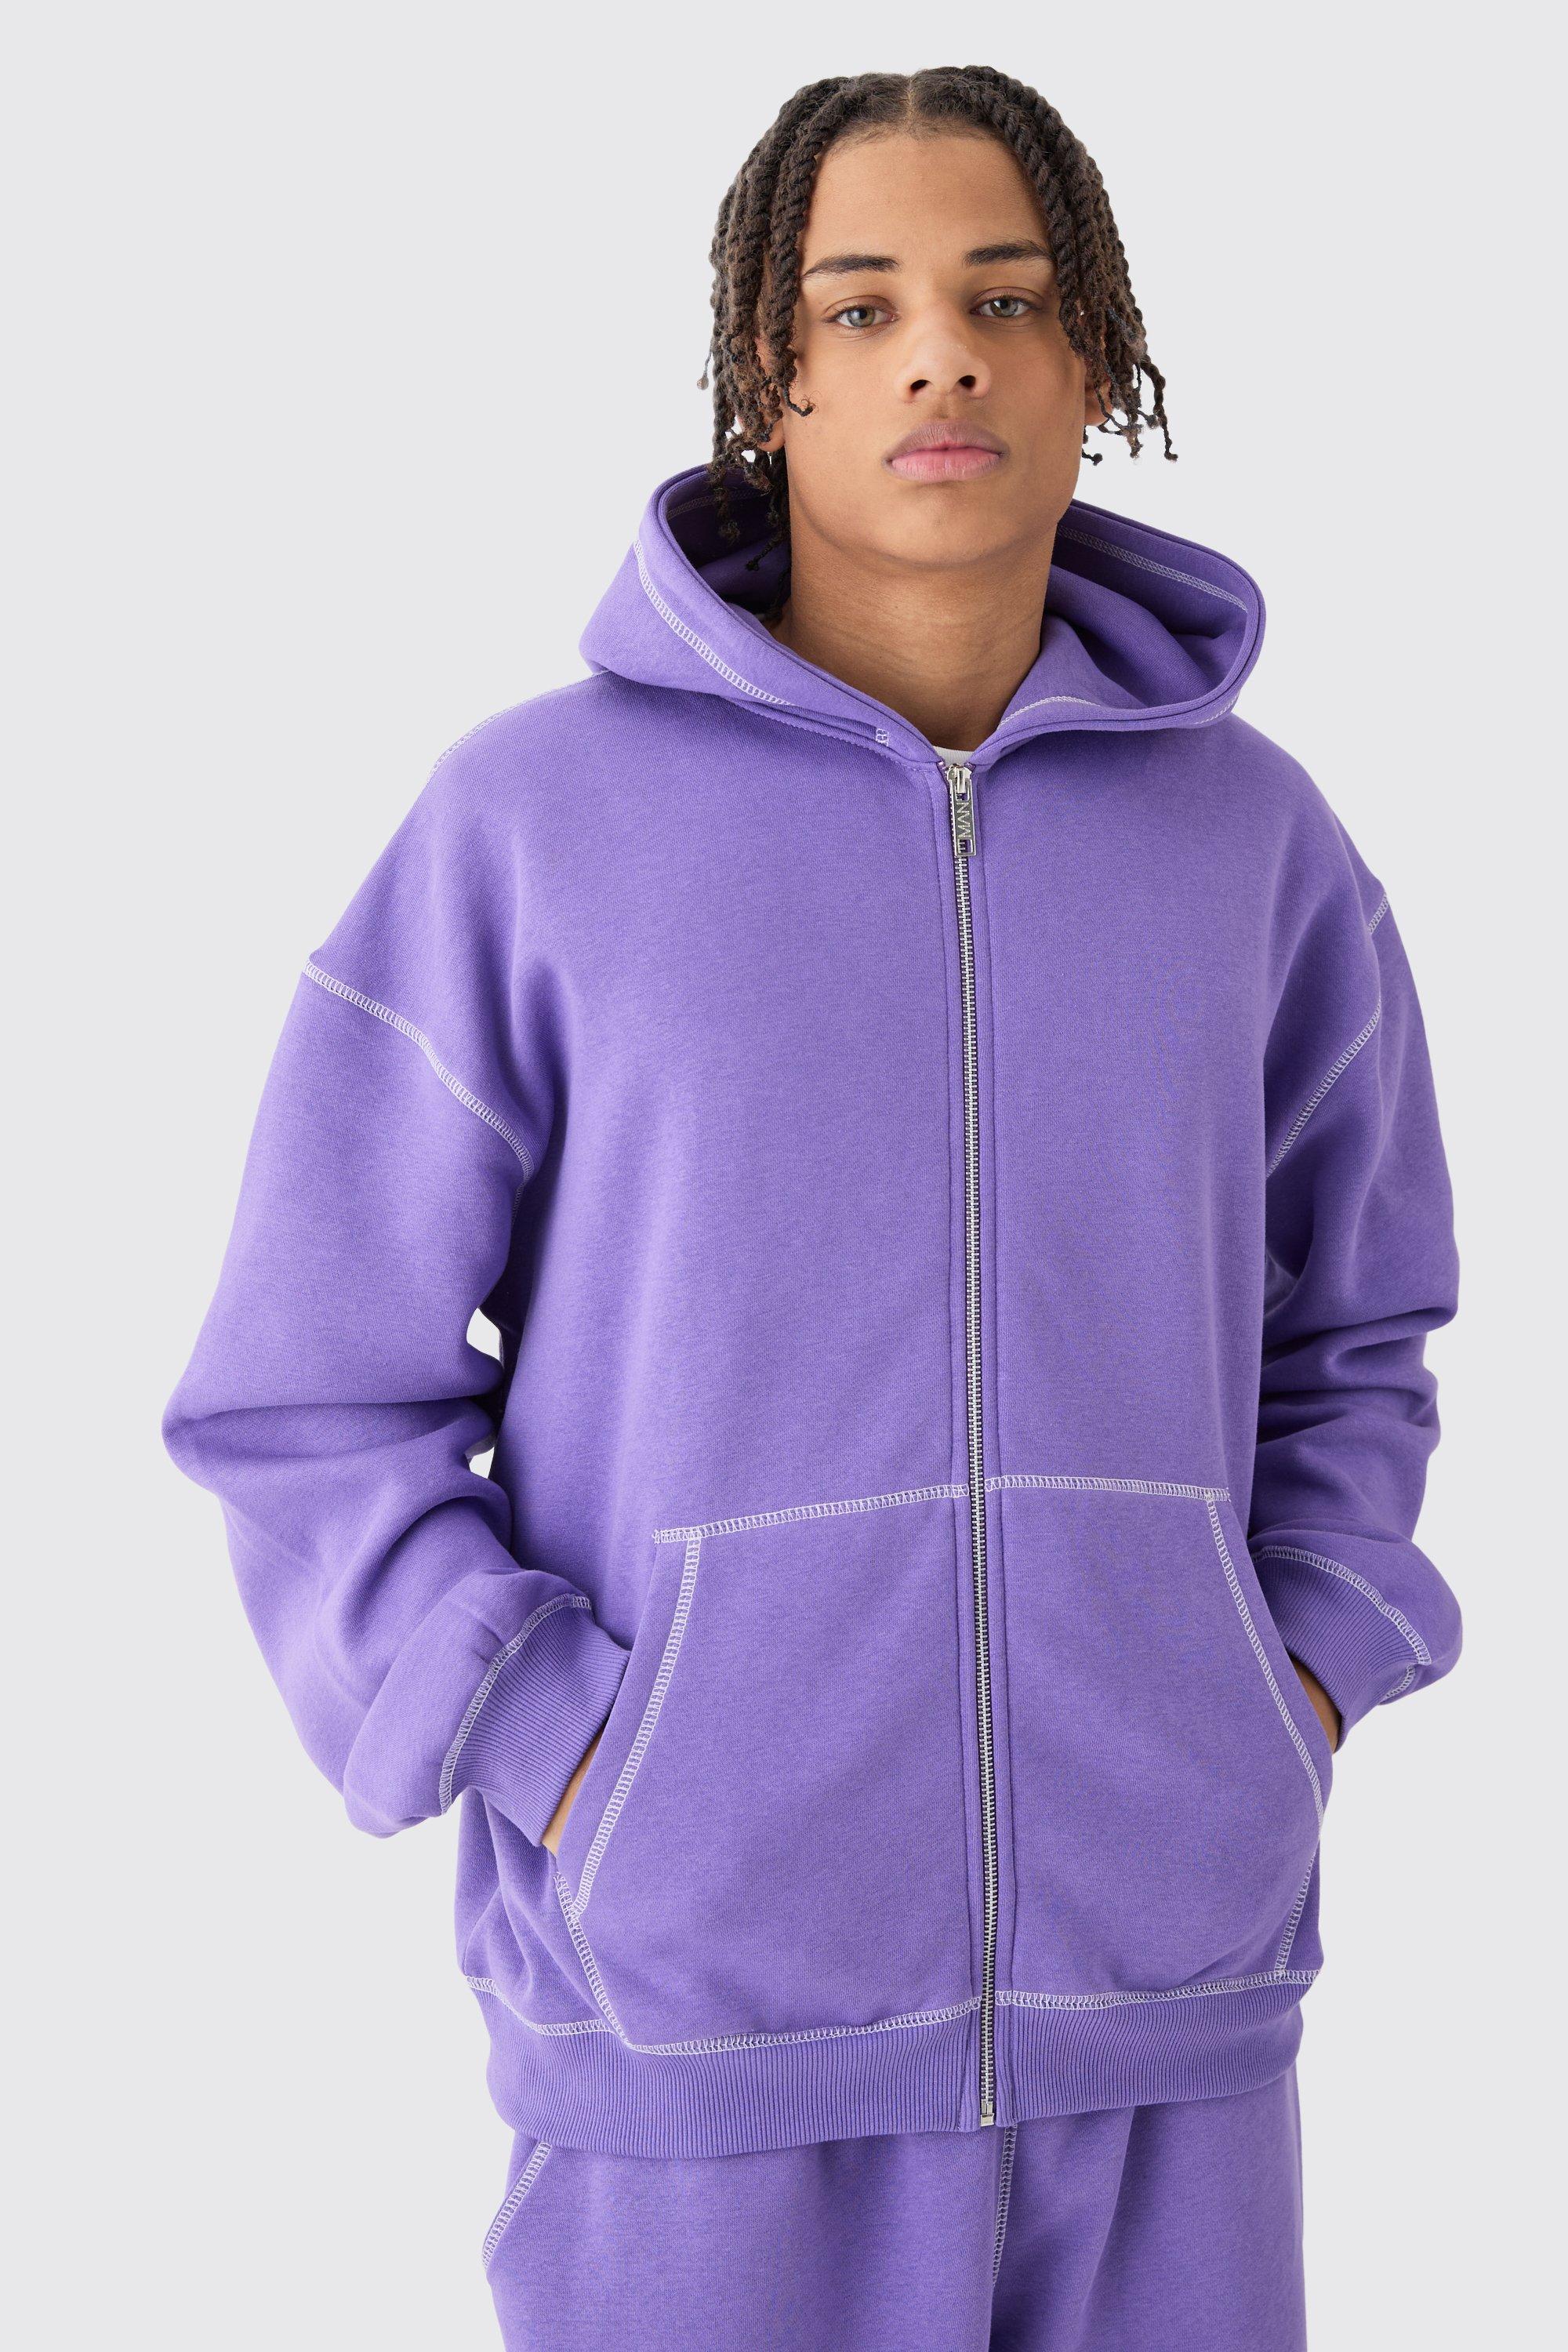 Image of Felpa oversize con cuciture a contrasto, zip e cappuccio, Purple